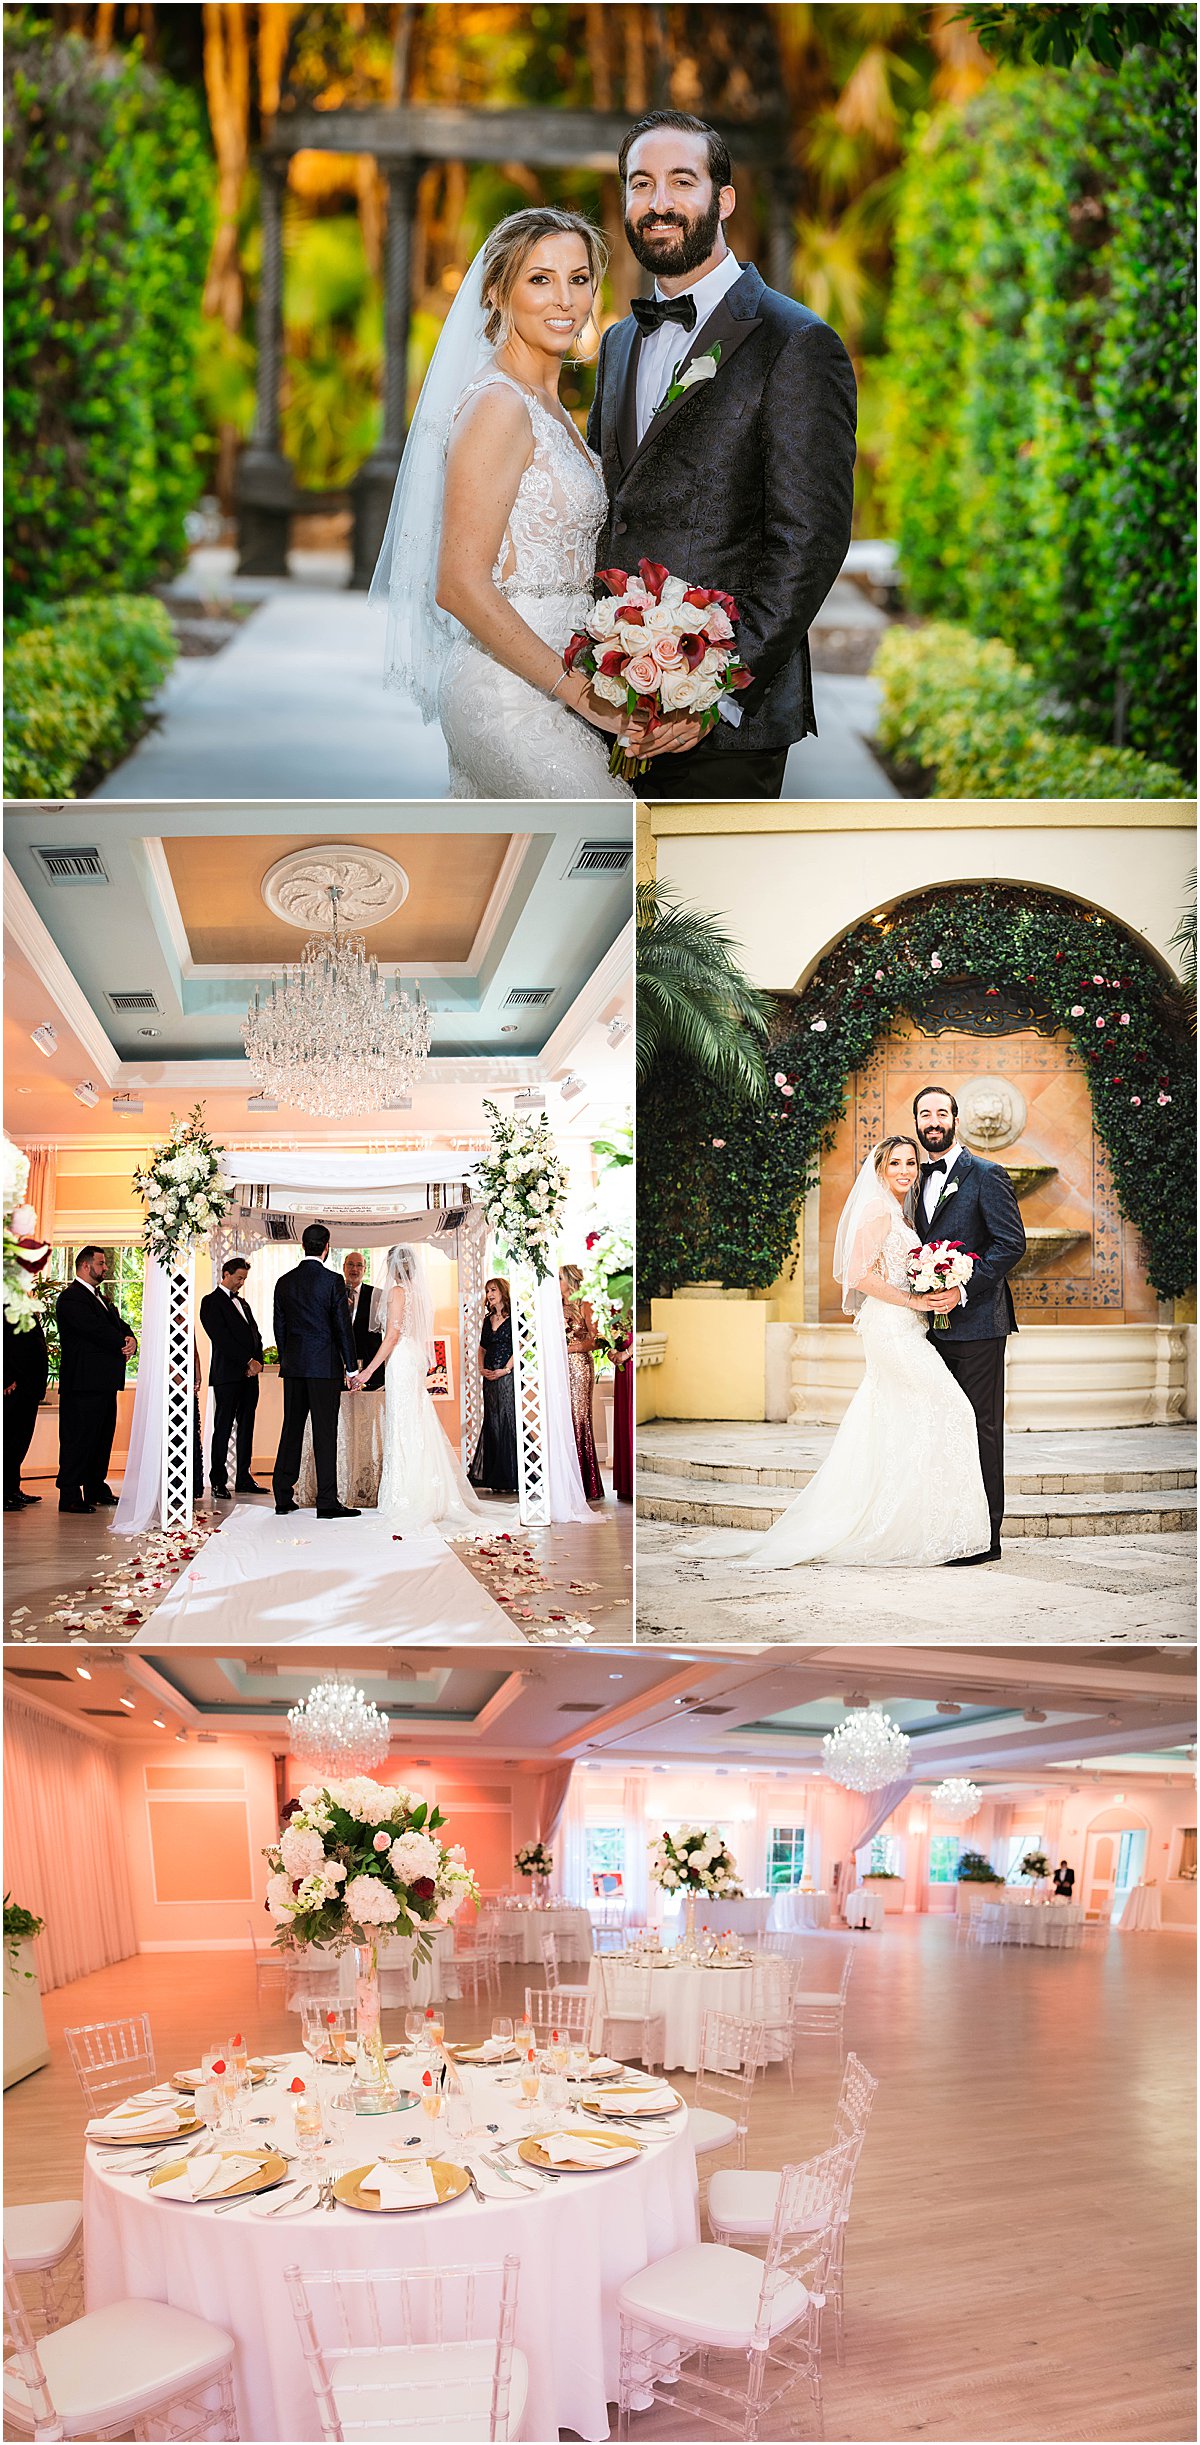 Benvenuto Restaurant | Top Palm Beach Wedding Venue | Married in Palm Beach | www.marriedinpalmbeach.com | Rosina DiBello Photography Studio